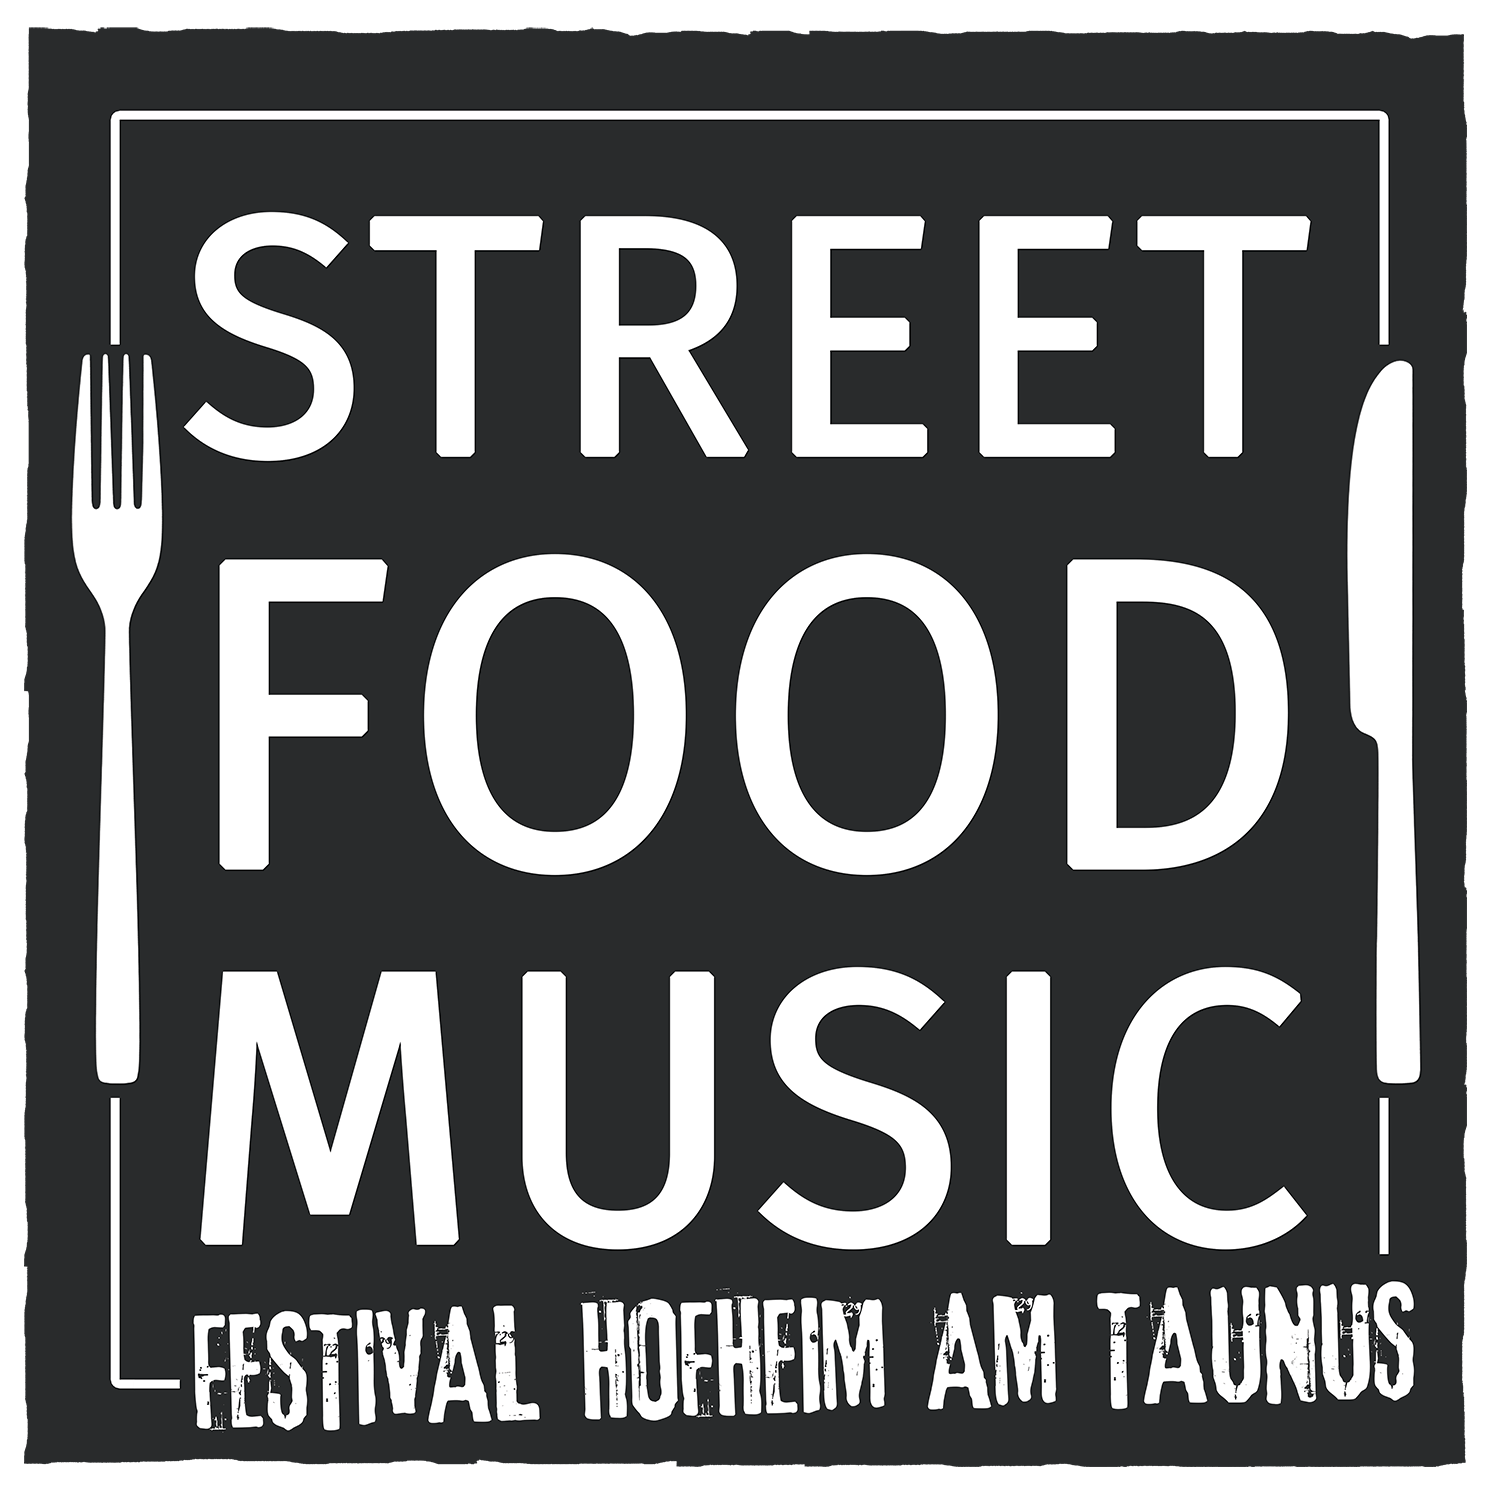 Street Food & Music Festival Hofheim a. T.